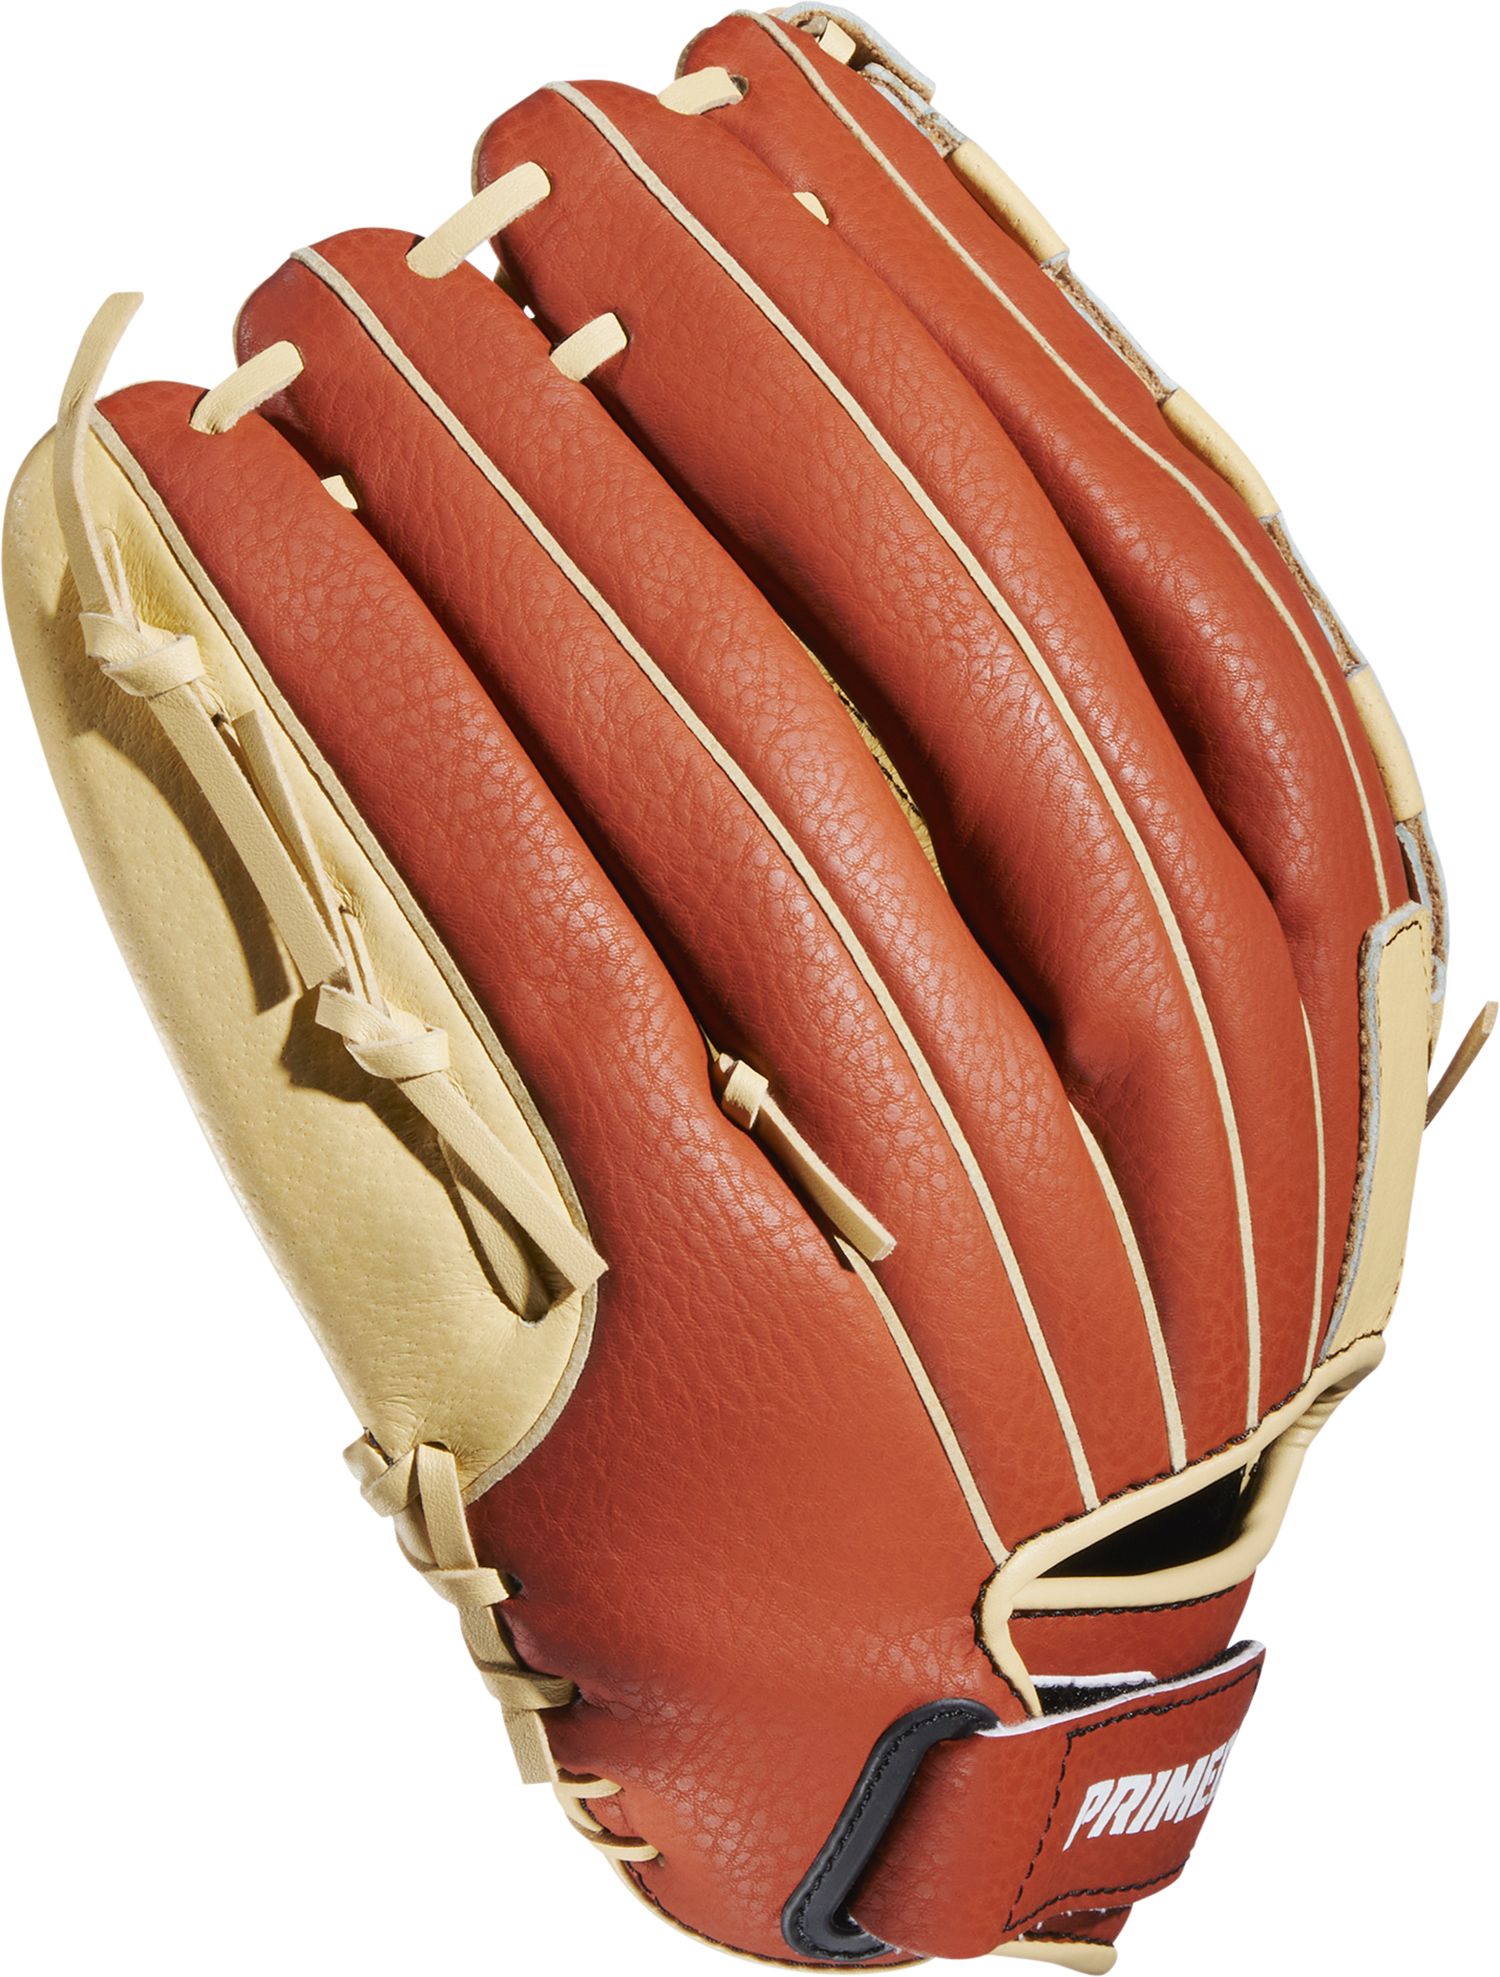 PRIMED 12" Velocity Series Baseball/Softball Glove